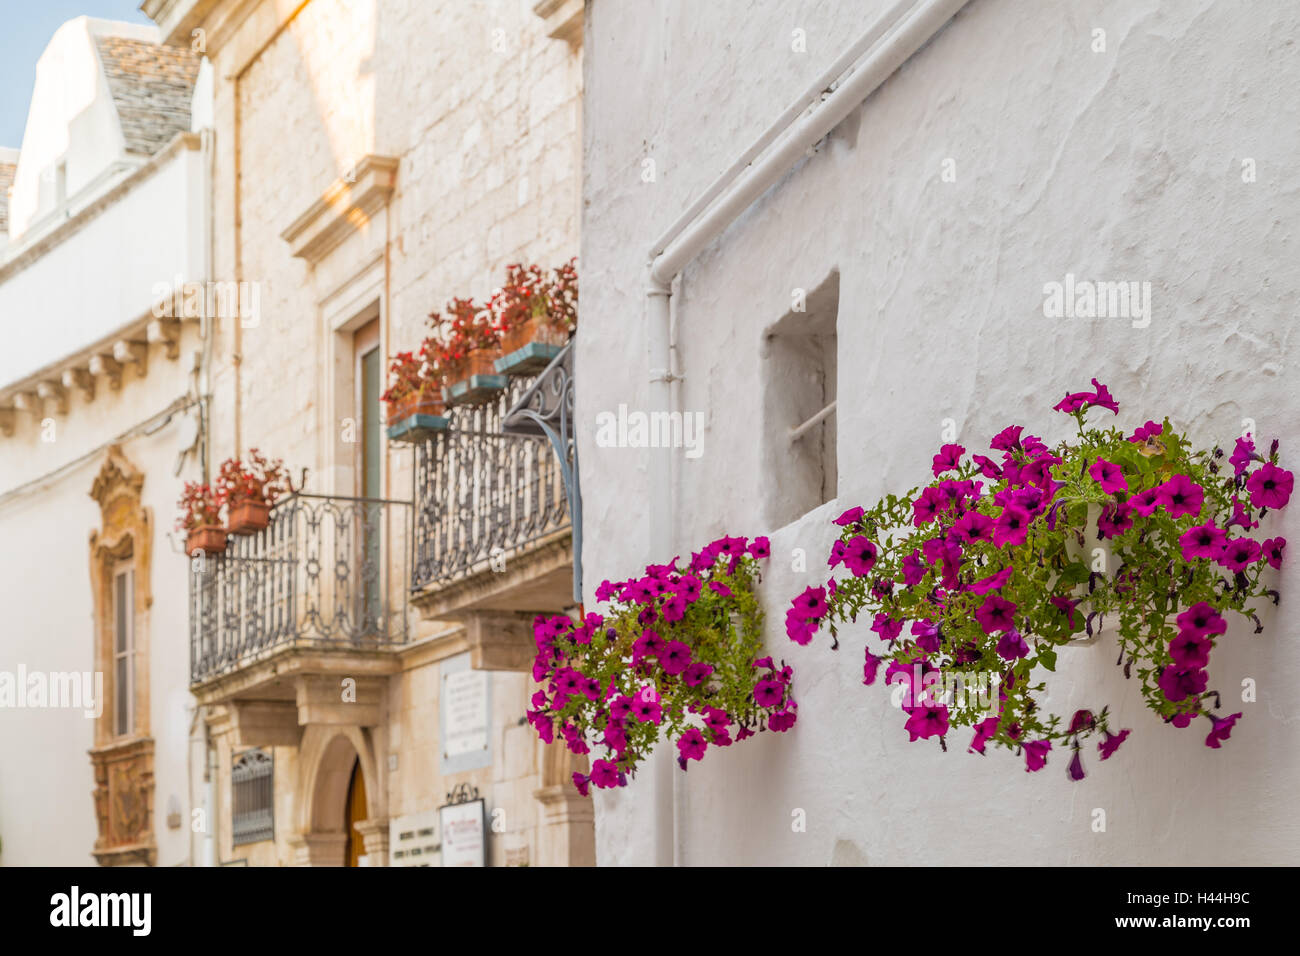 locorotondo in Apulia, Italy, hanging flowers of whitewashed houses on narrow streets Stock Photo